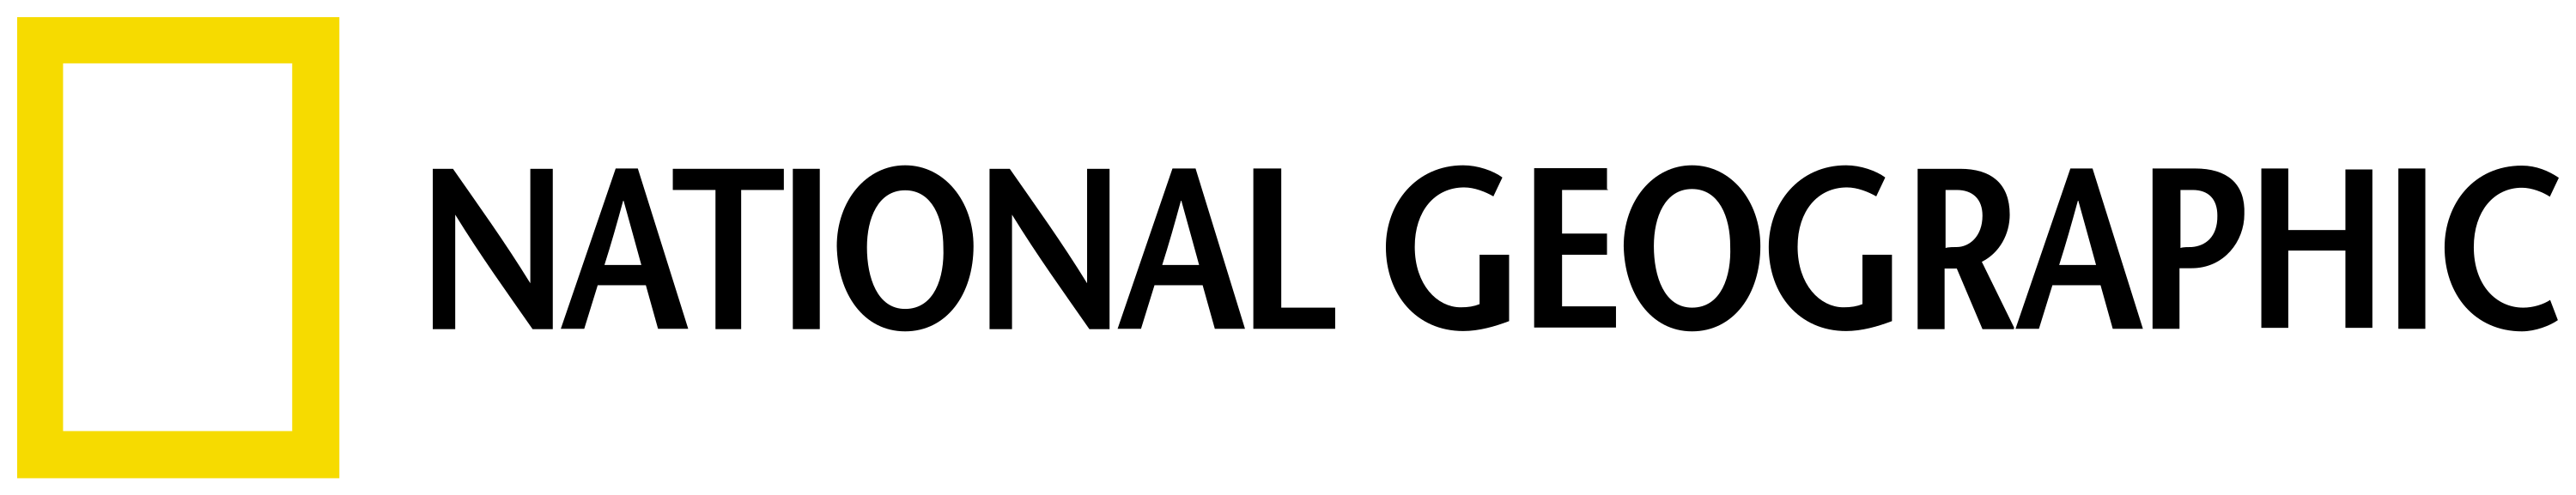 National Geographic Logo - National Geographic Logo.svg